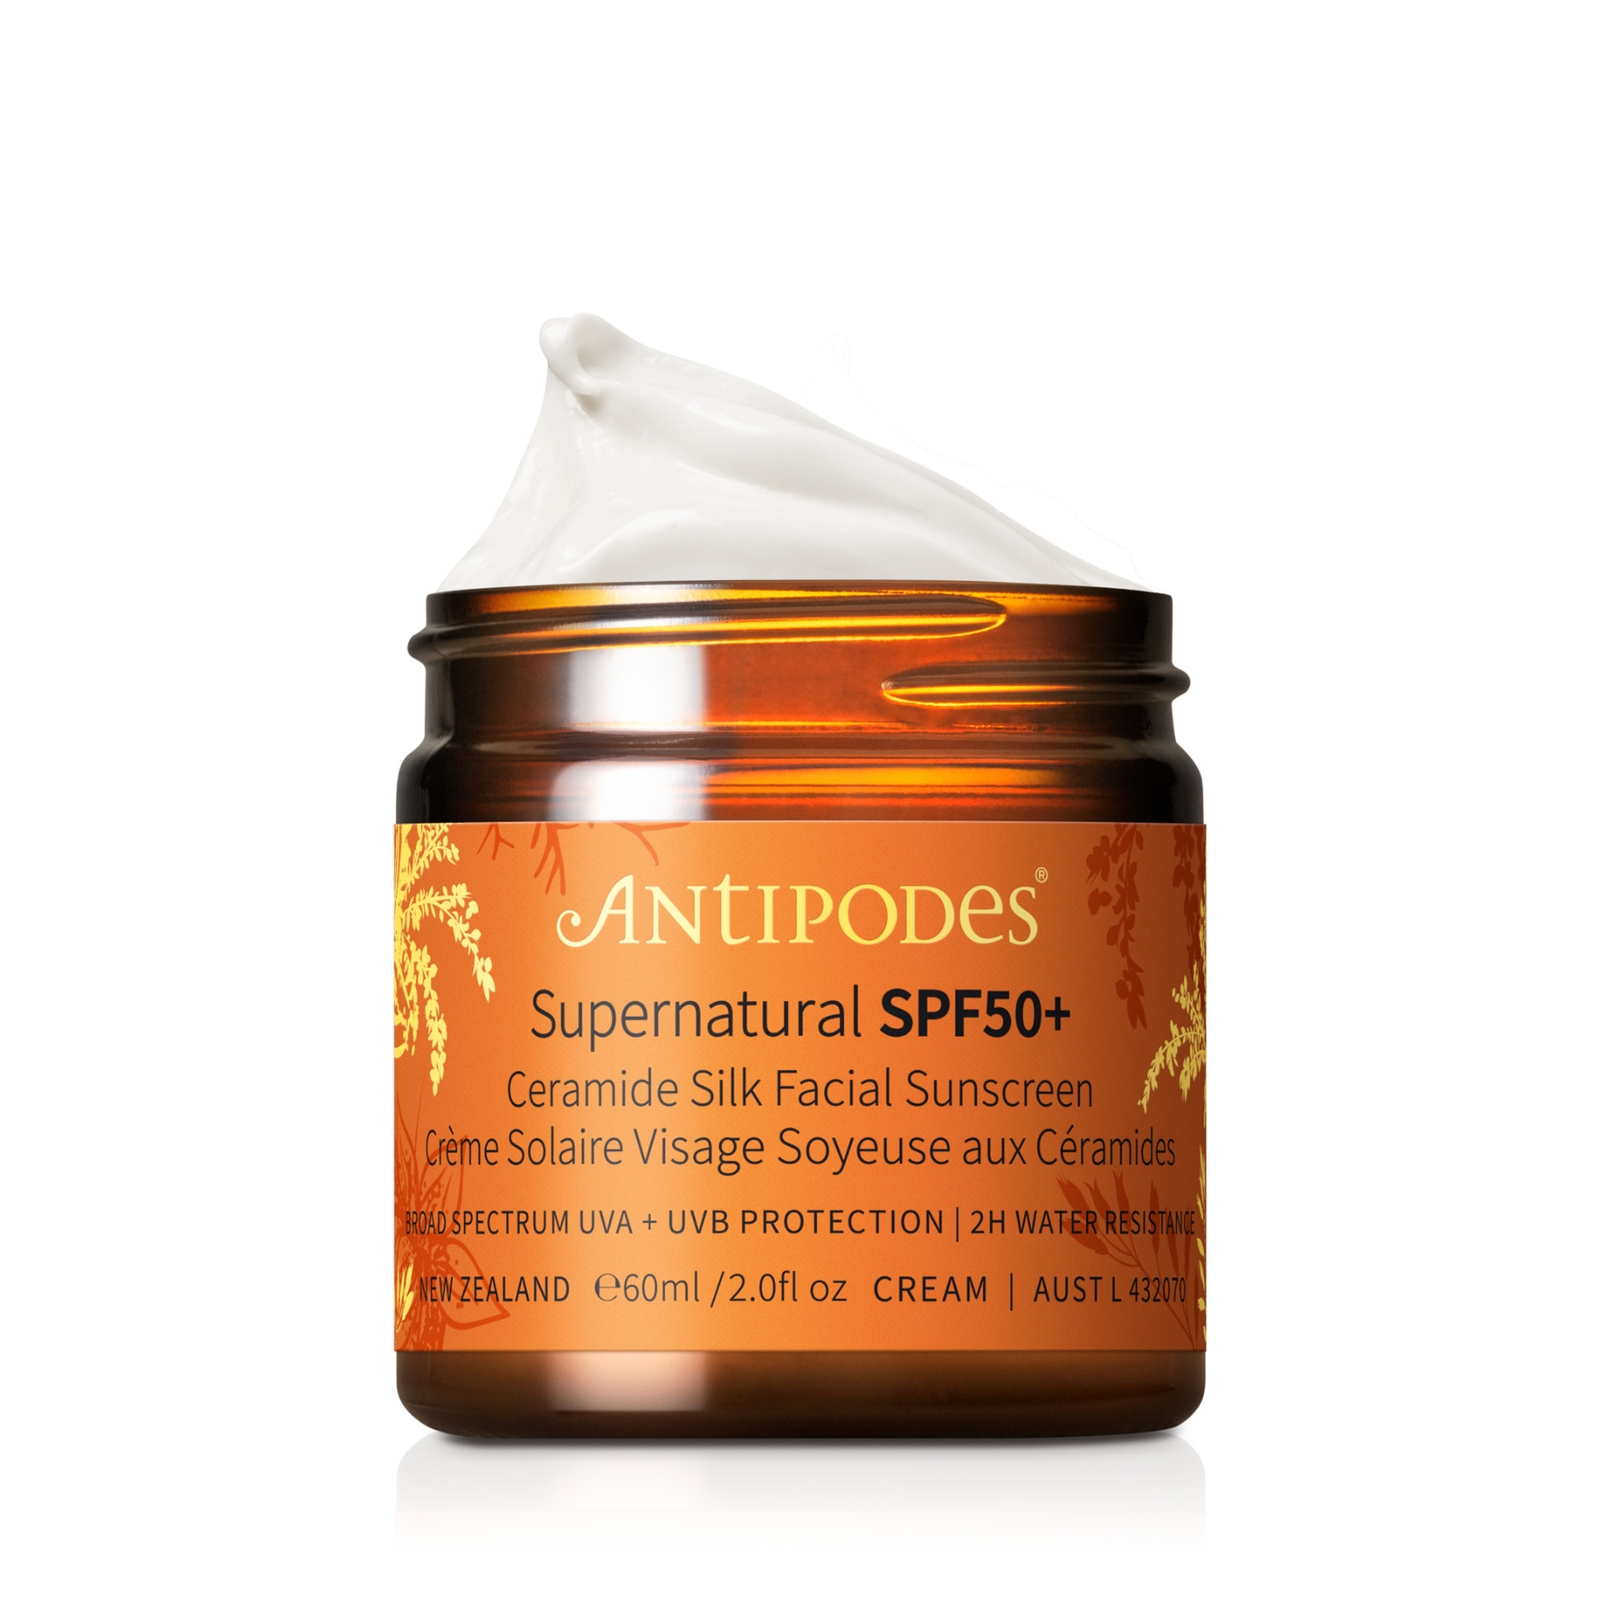 Image of Antipodes Supernatural SPF50+ Ceramide Silk Facial Sunscreen 60ml